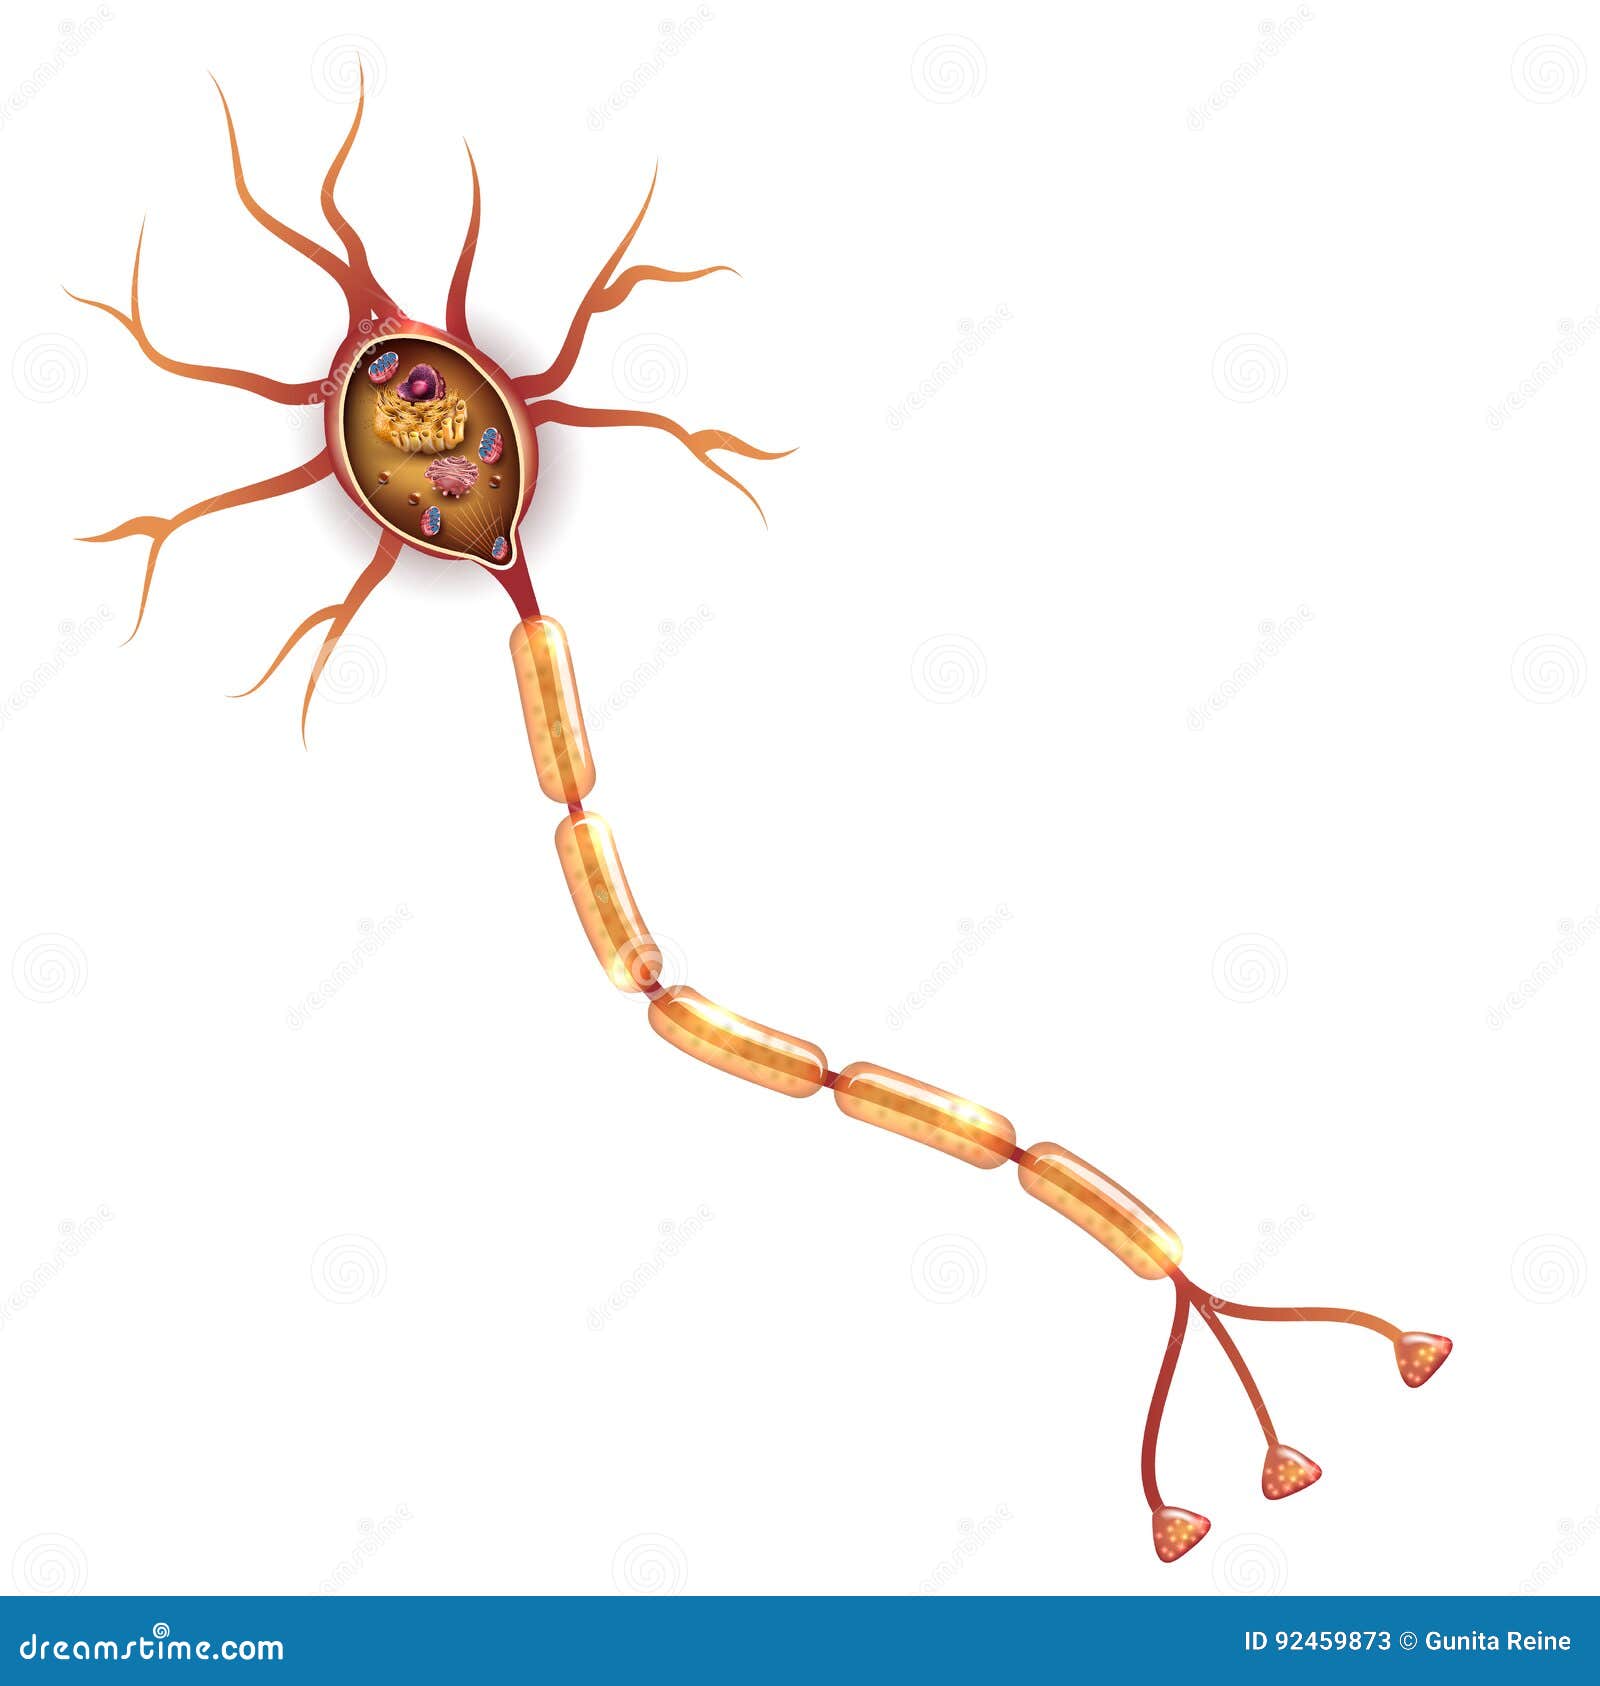 neuron, nerve cell anatomy